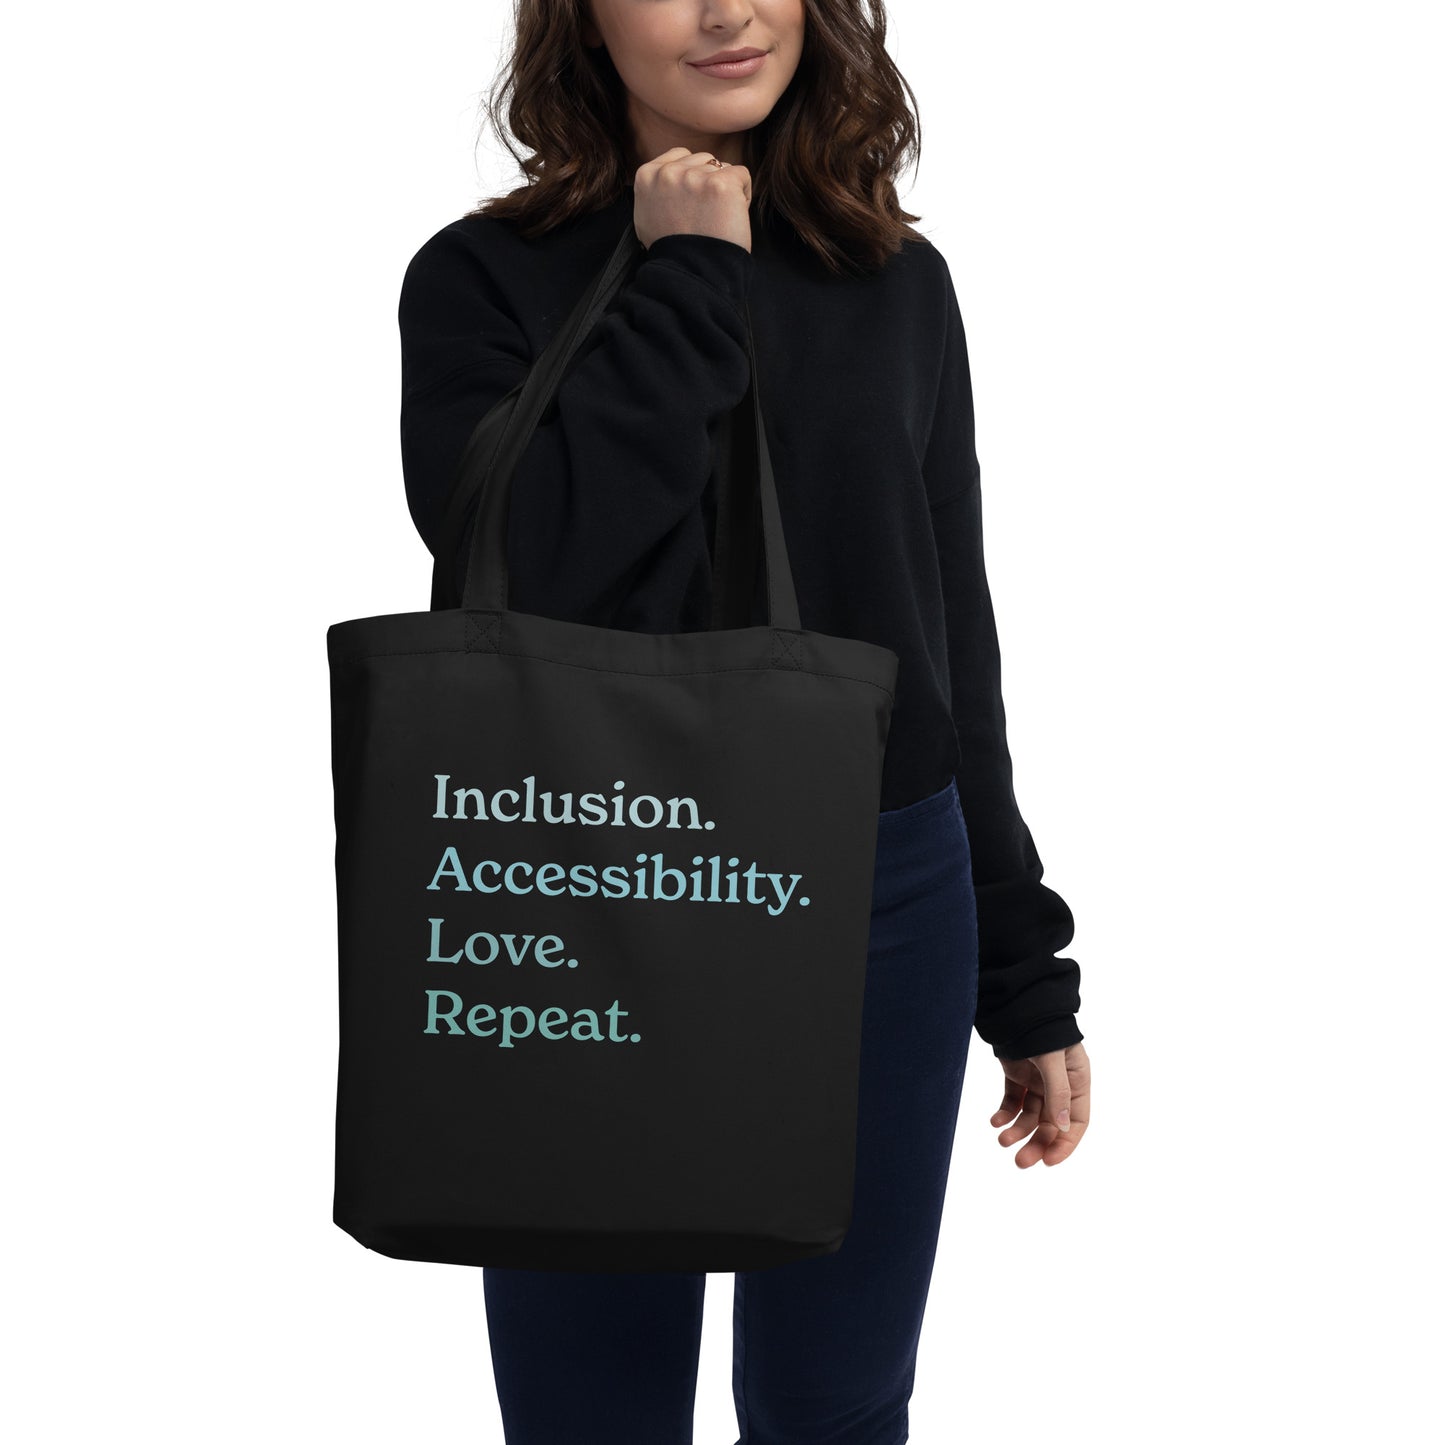 Inclusion. Accessibility. Love. Repeat. — Large Eco Tote